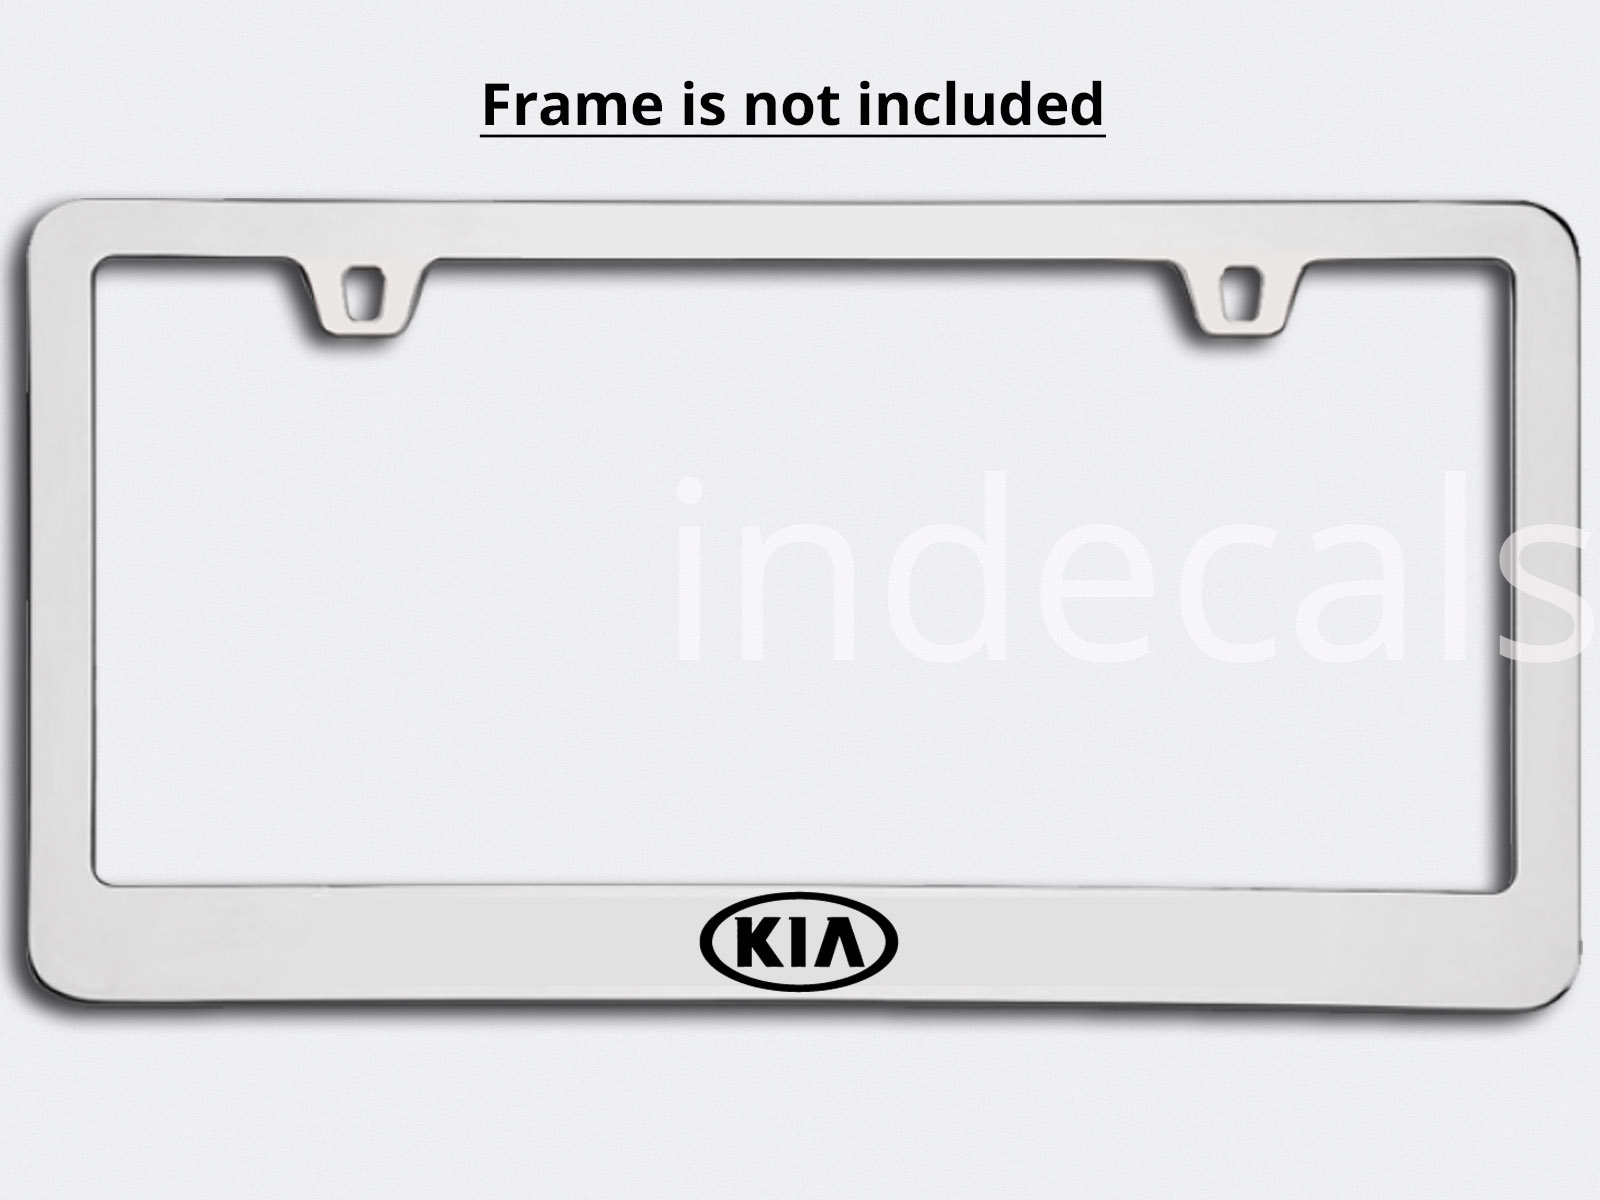 3 x KIA Stickers for License Plate Frame - Black